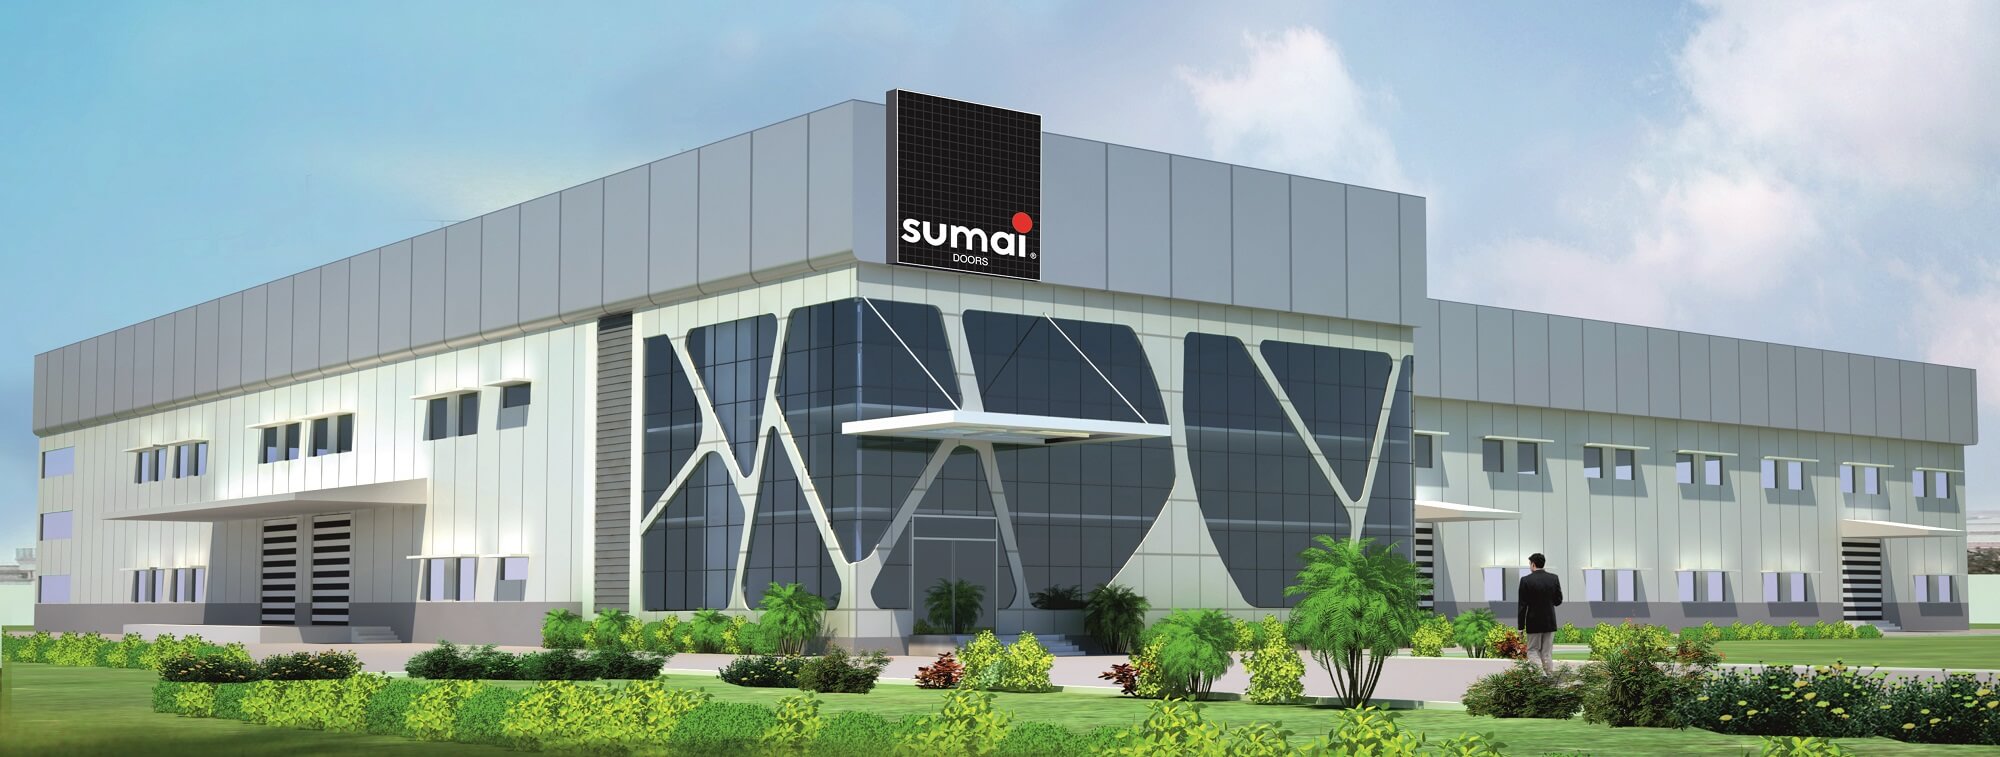 Sumai Factory Building Image